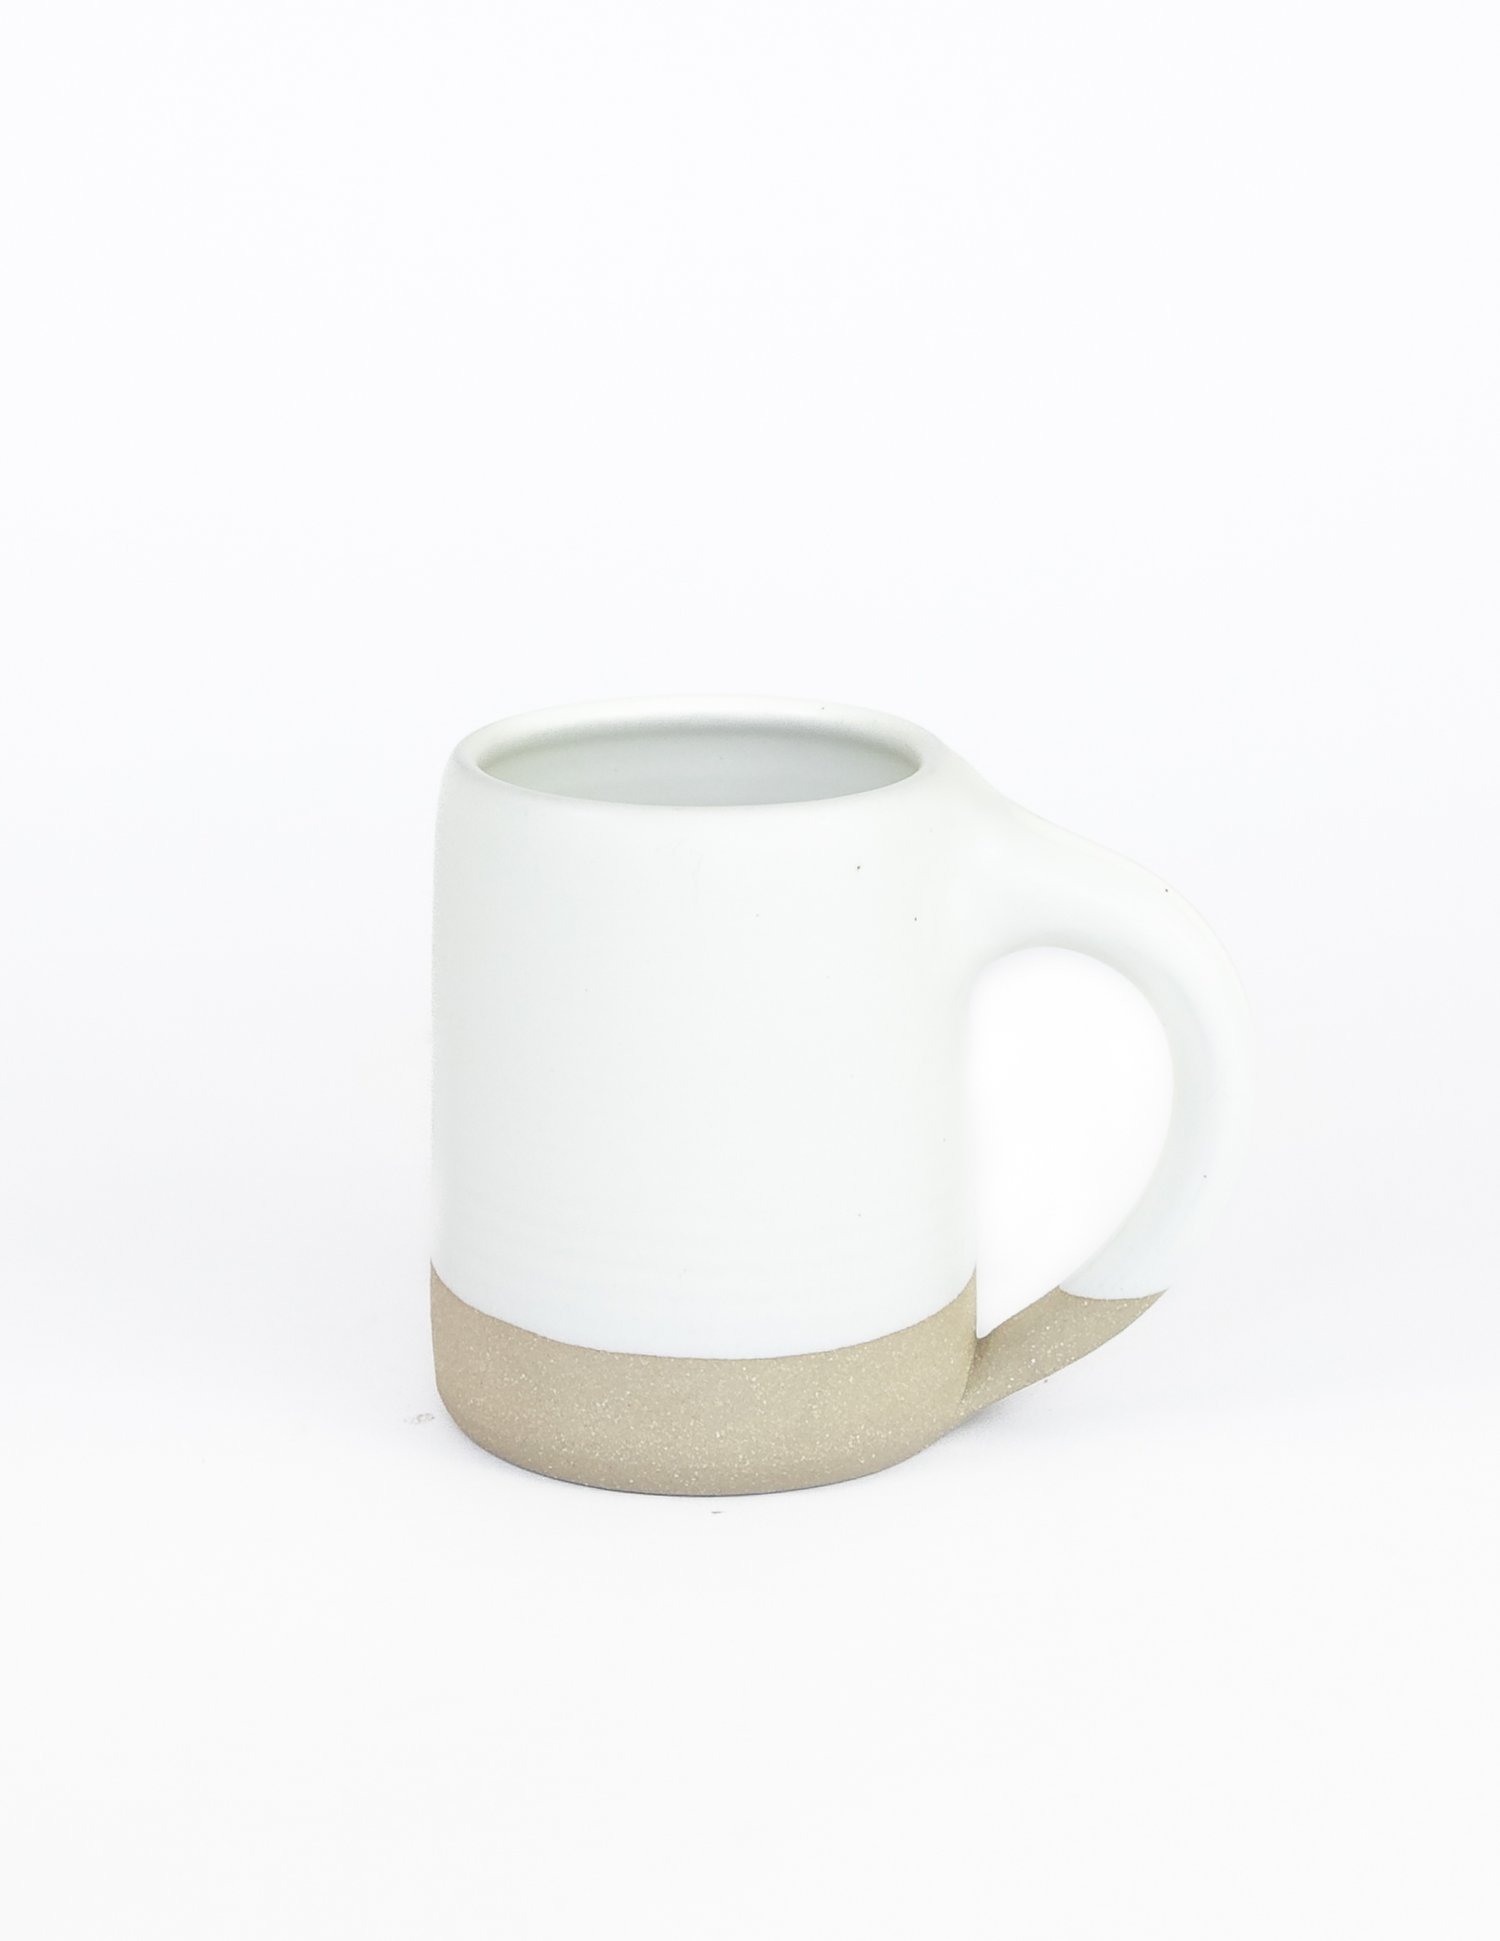 Stoneware Mug With Handle, Stoneware Coffee Mug, Pottery Mug